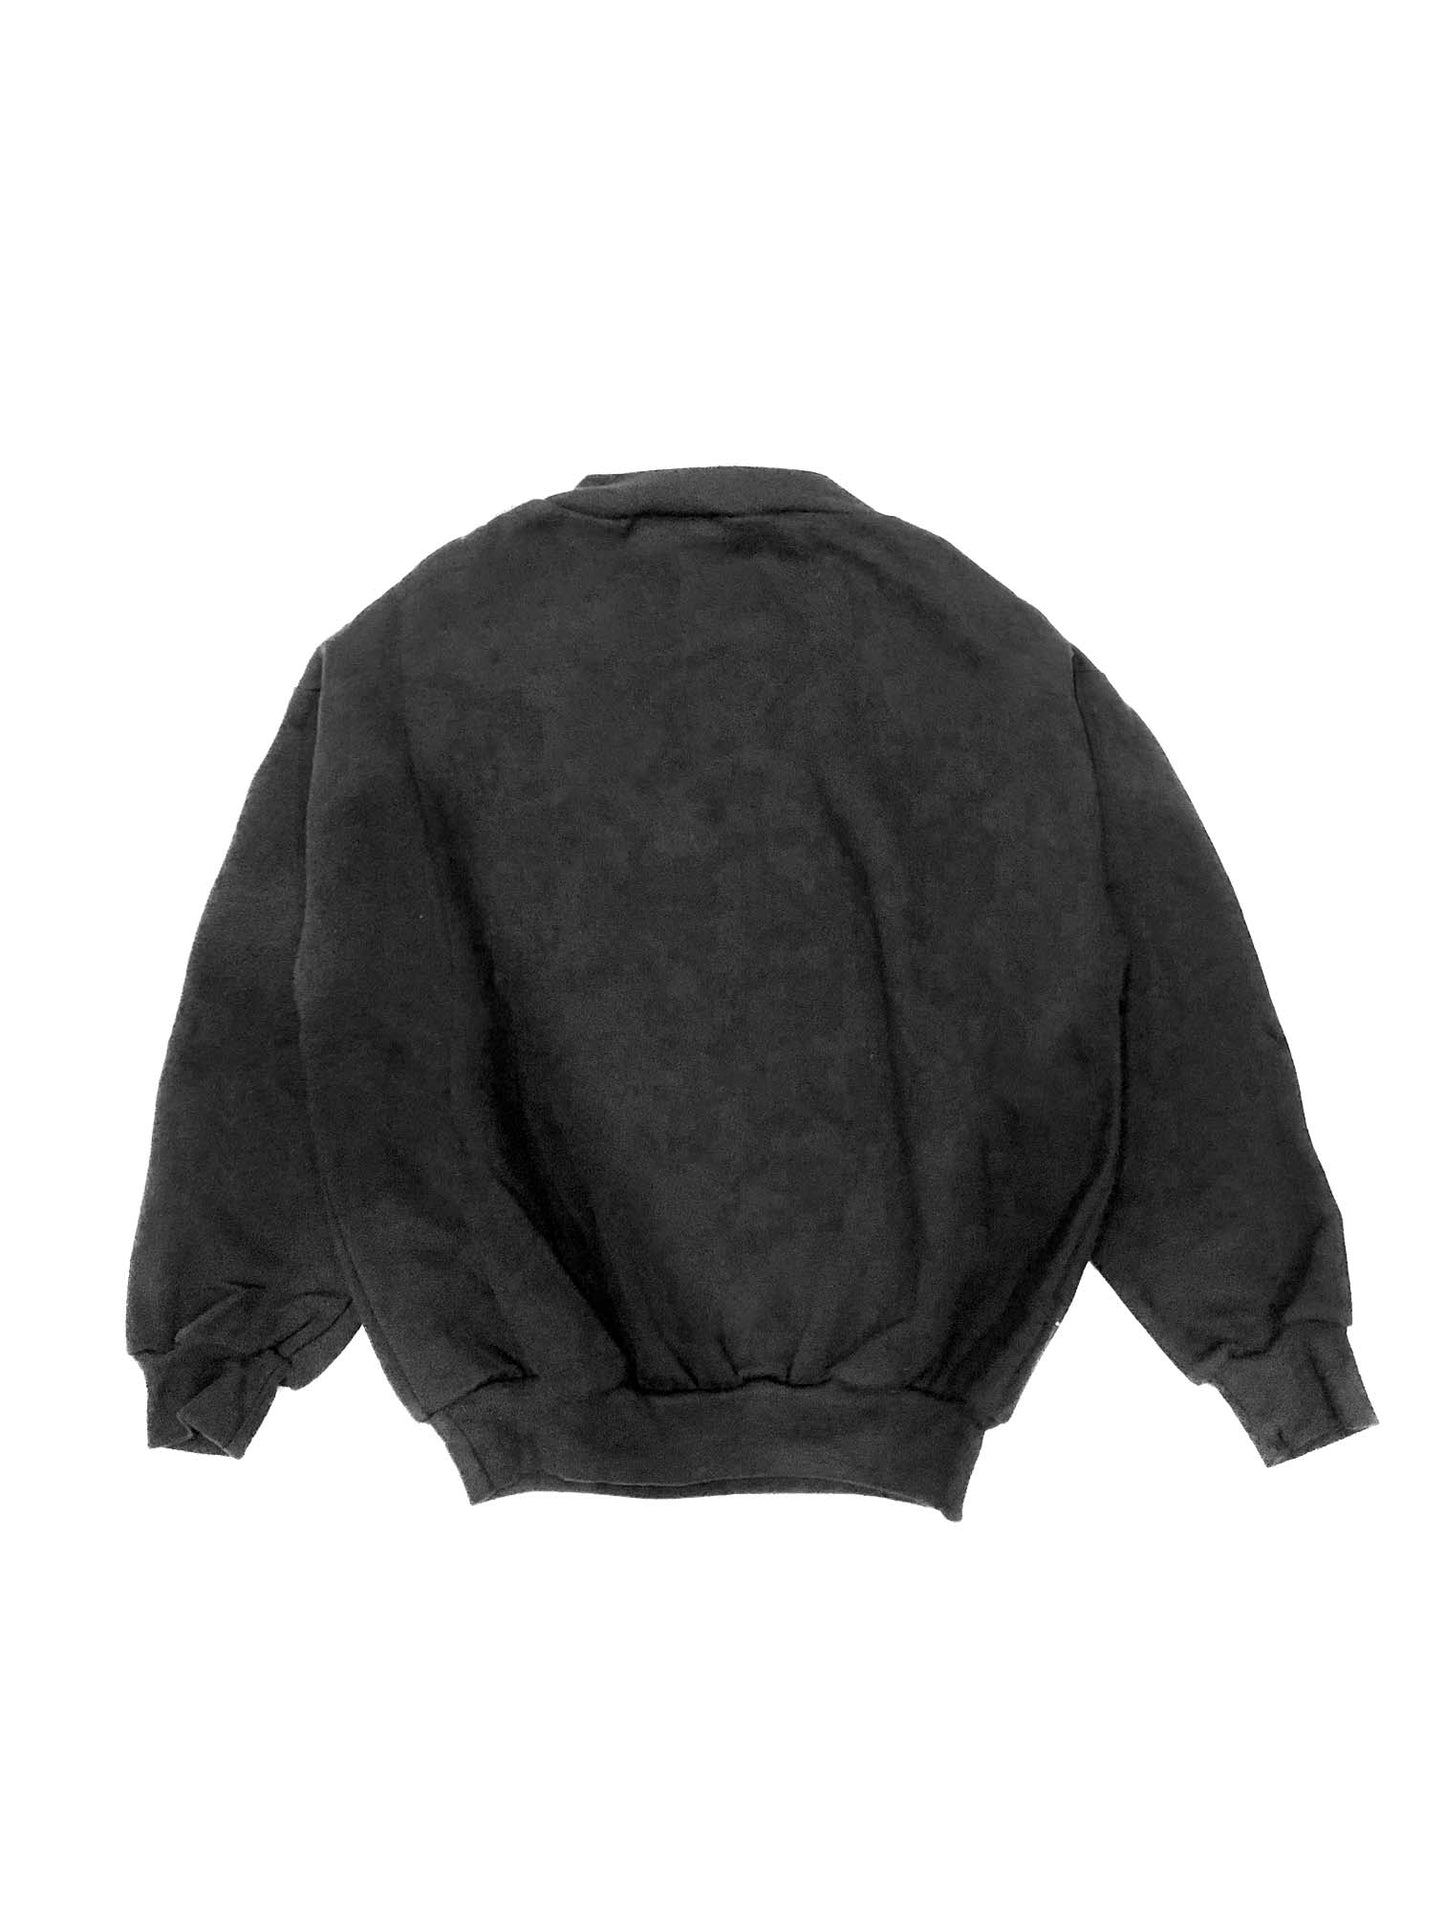 Unisex Kids Black Sweatshirt - S-XL